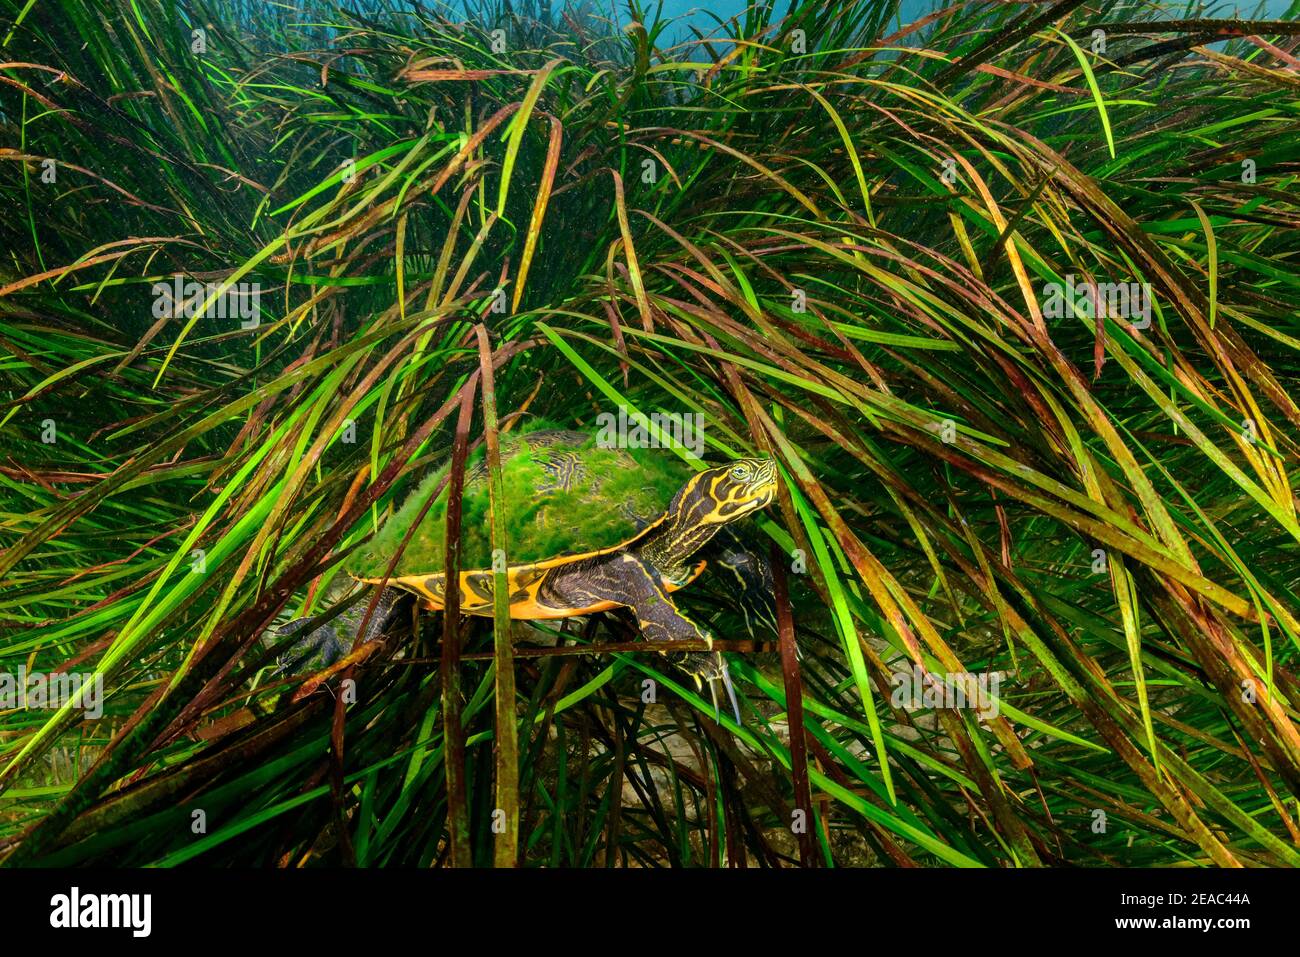 Common Florida eared turtle (Pseudemys concinna floridana), underwater between plants, Rainbow River, Dunnellon, Marion County, Florida, USA Stock Photo